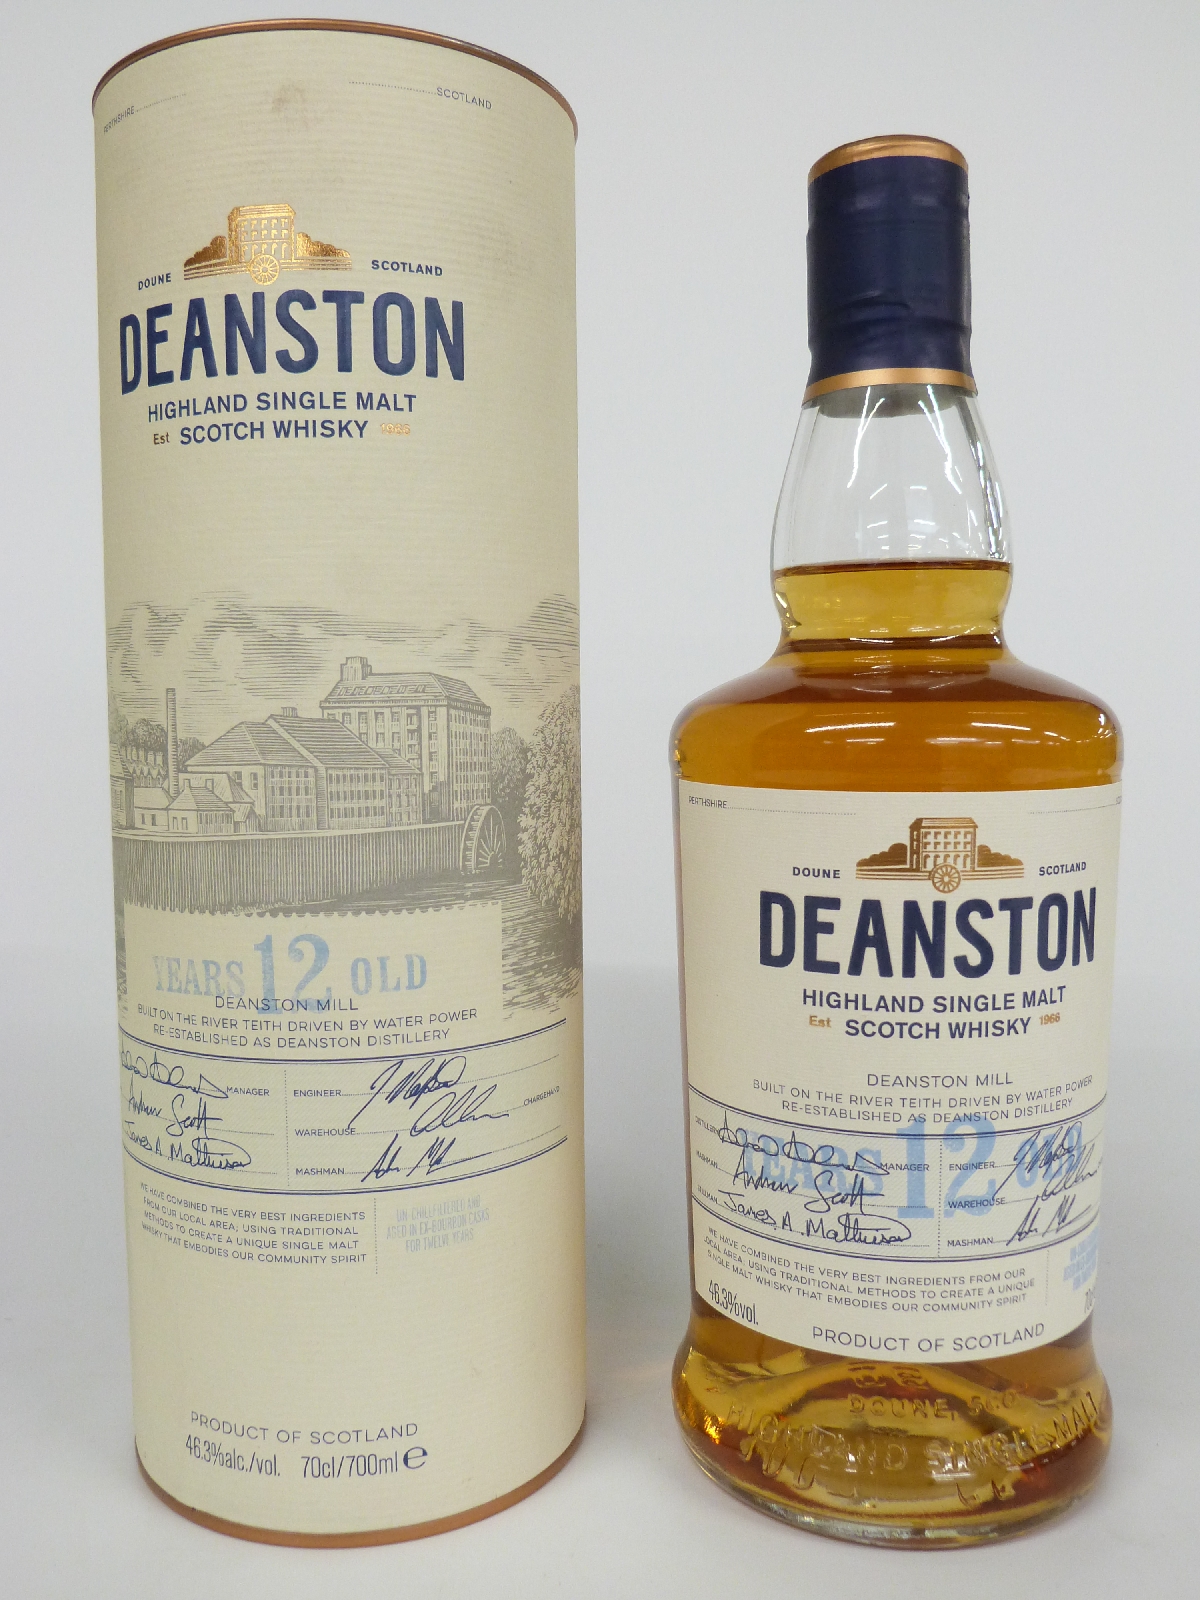 Deanston 12 year old Perthshire Highland single malt Scotch whisky, 70cl, 46.3% vol